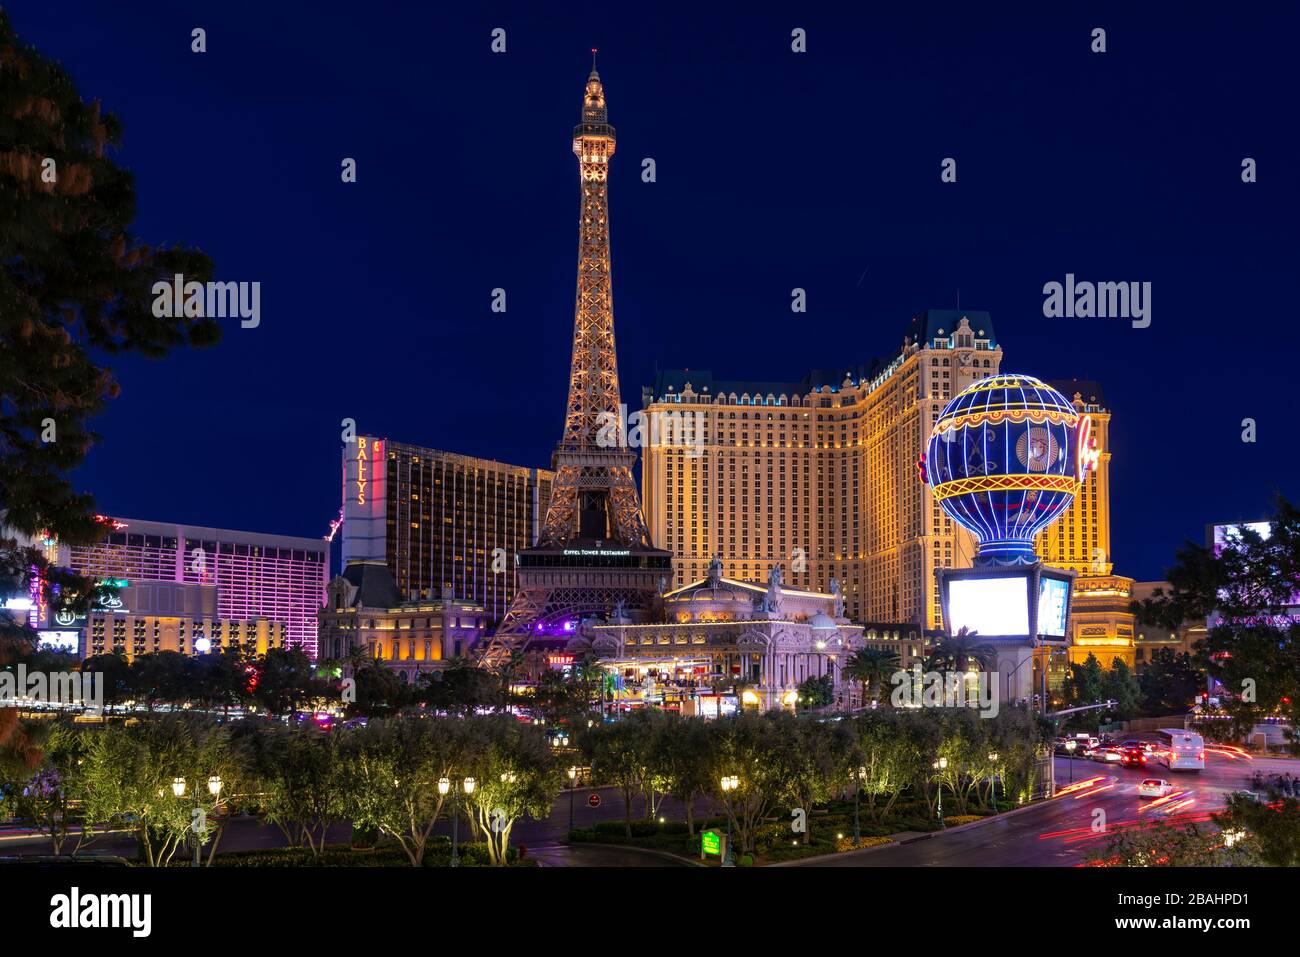 The Parisian casino and hotel complex along The Strip in Las Vegas ...